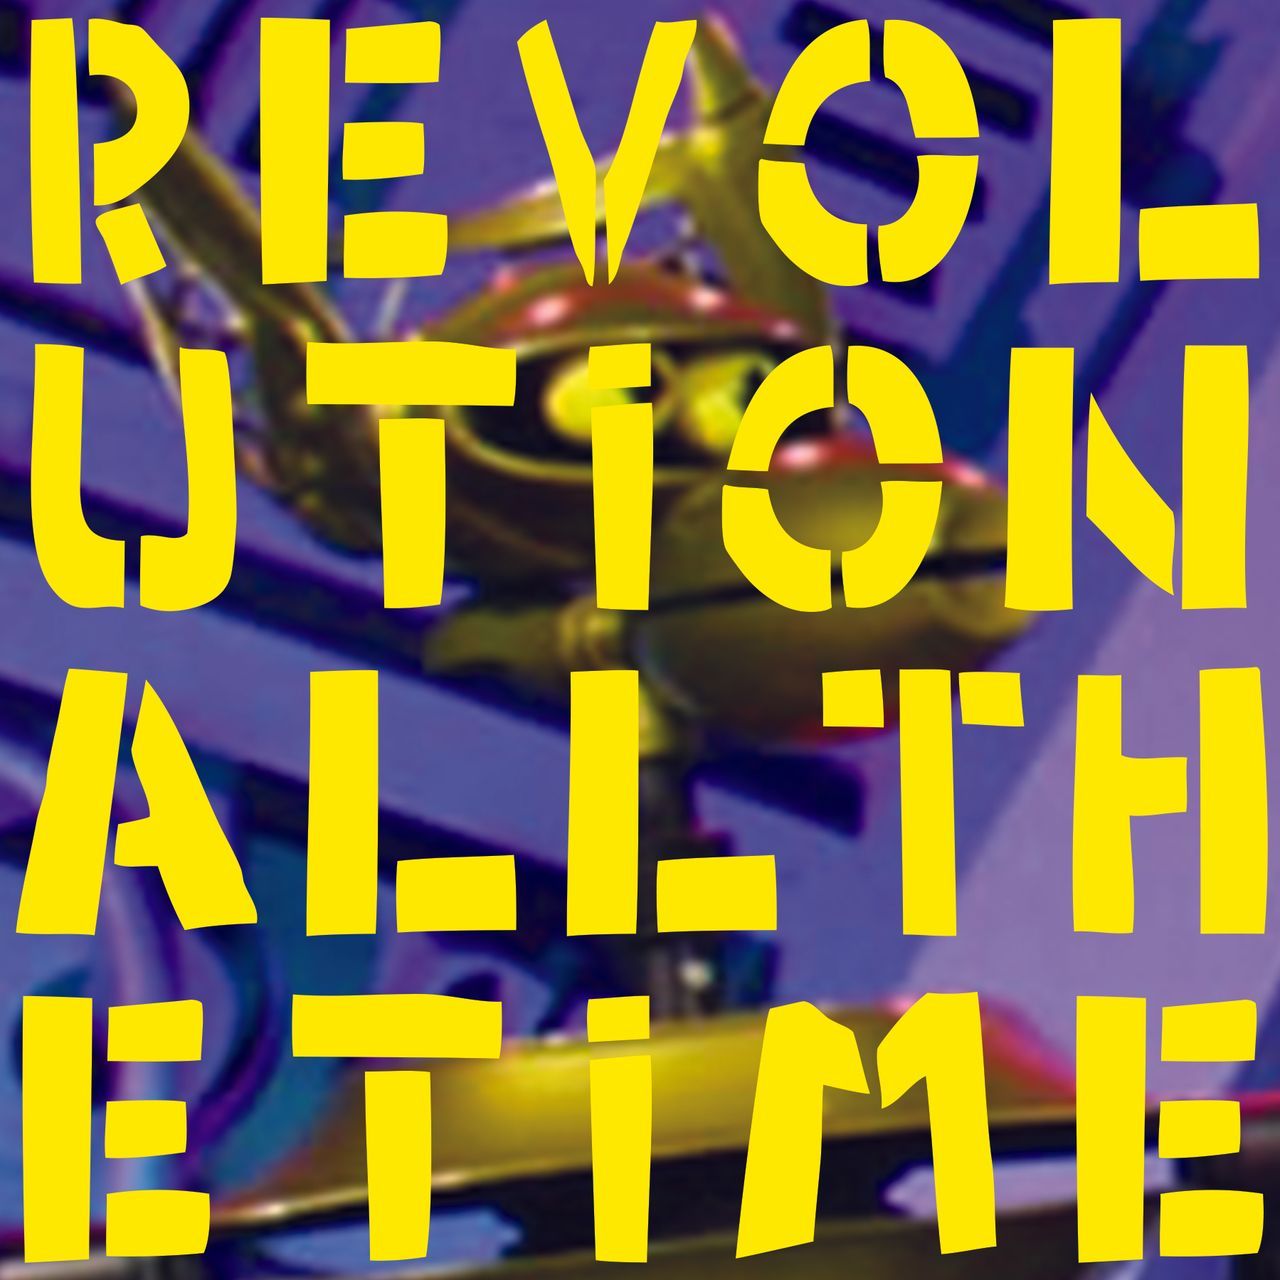 Revolution All the Time Plus Size album art